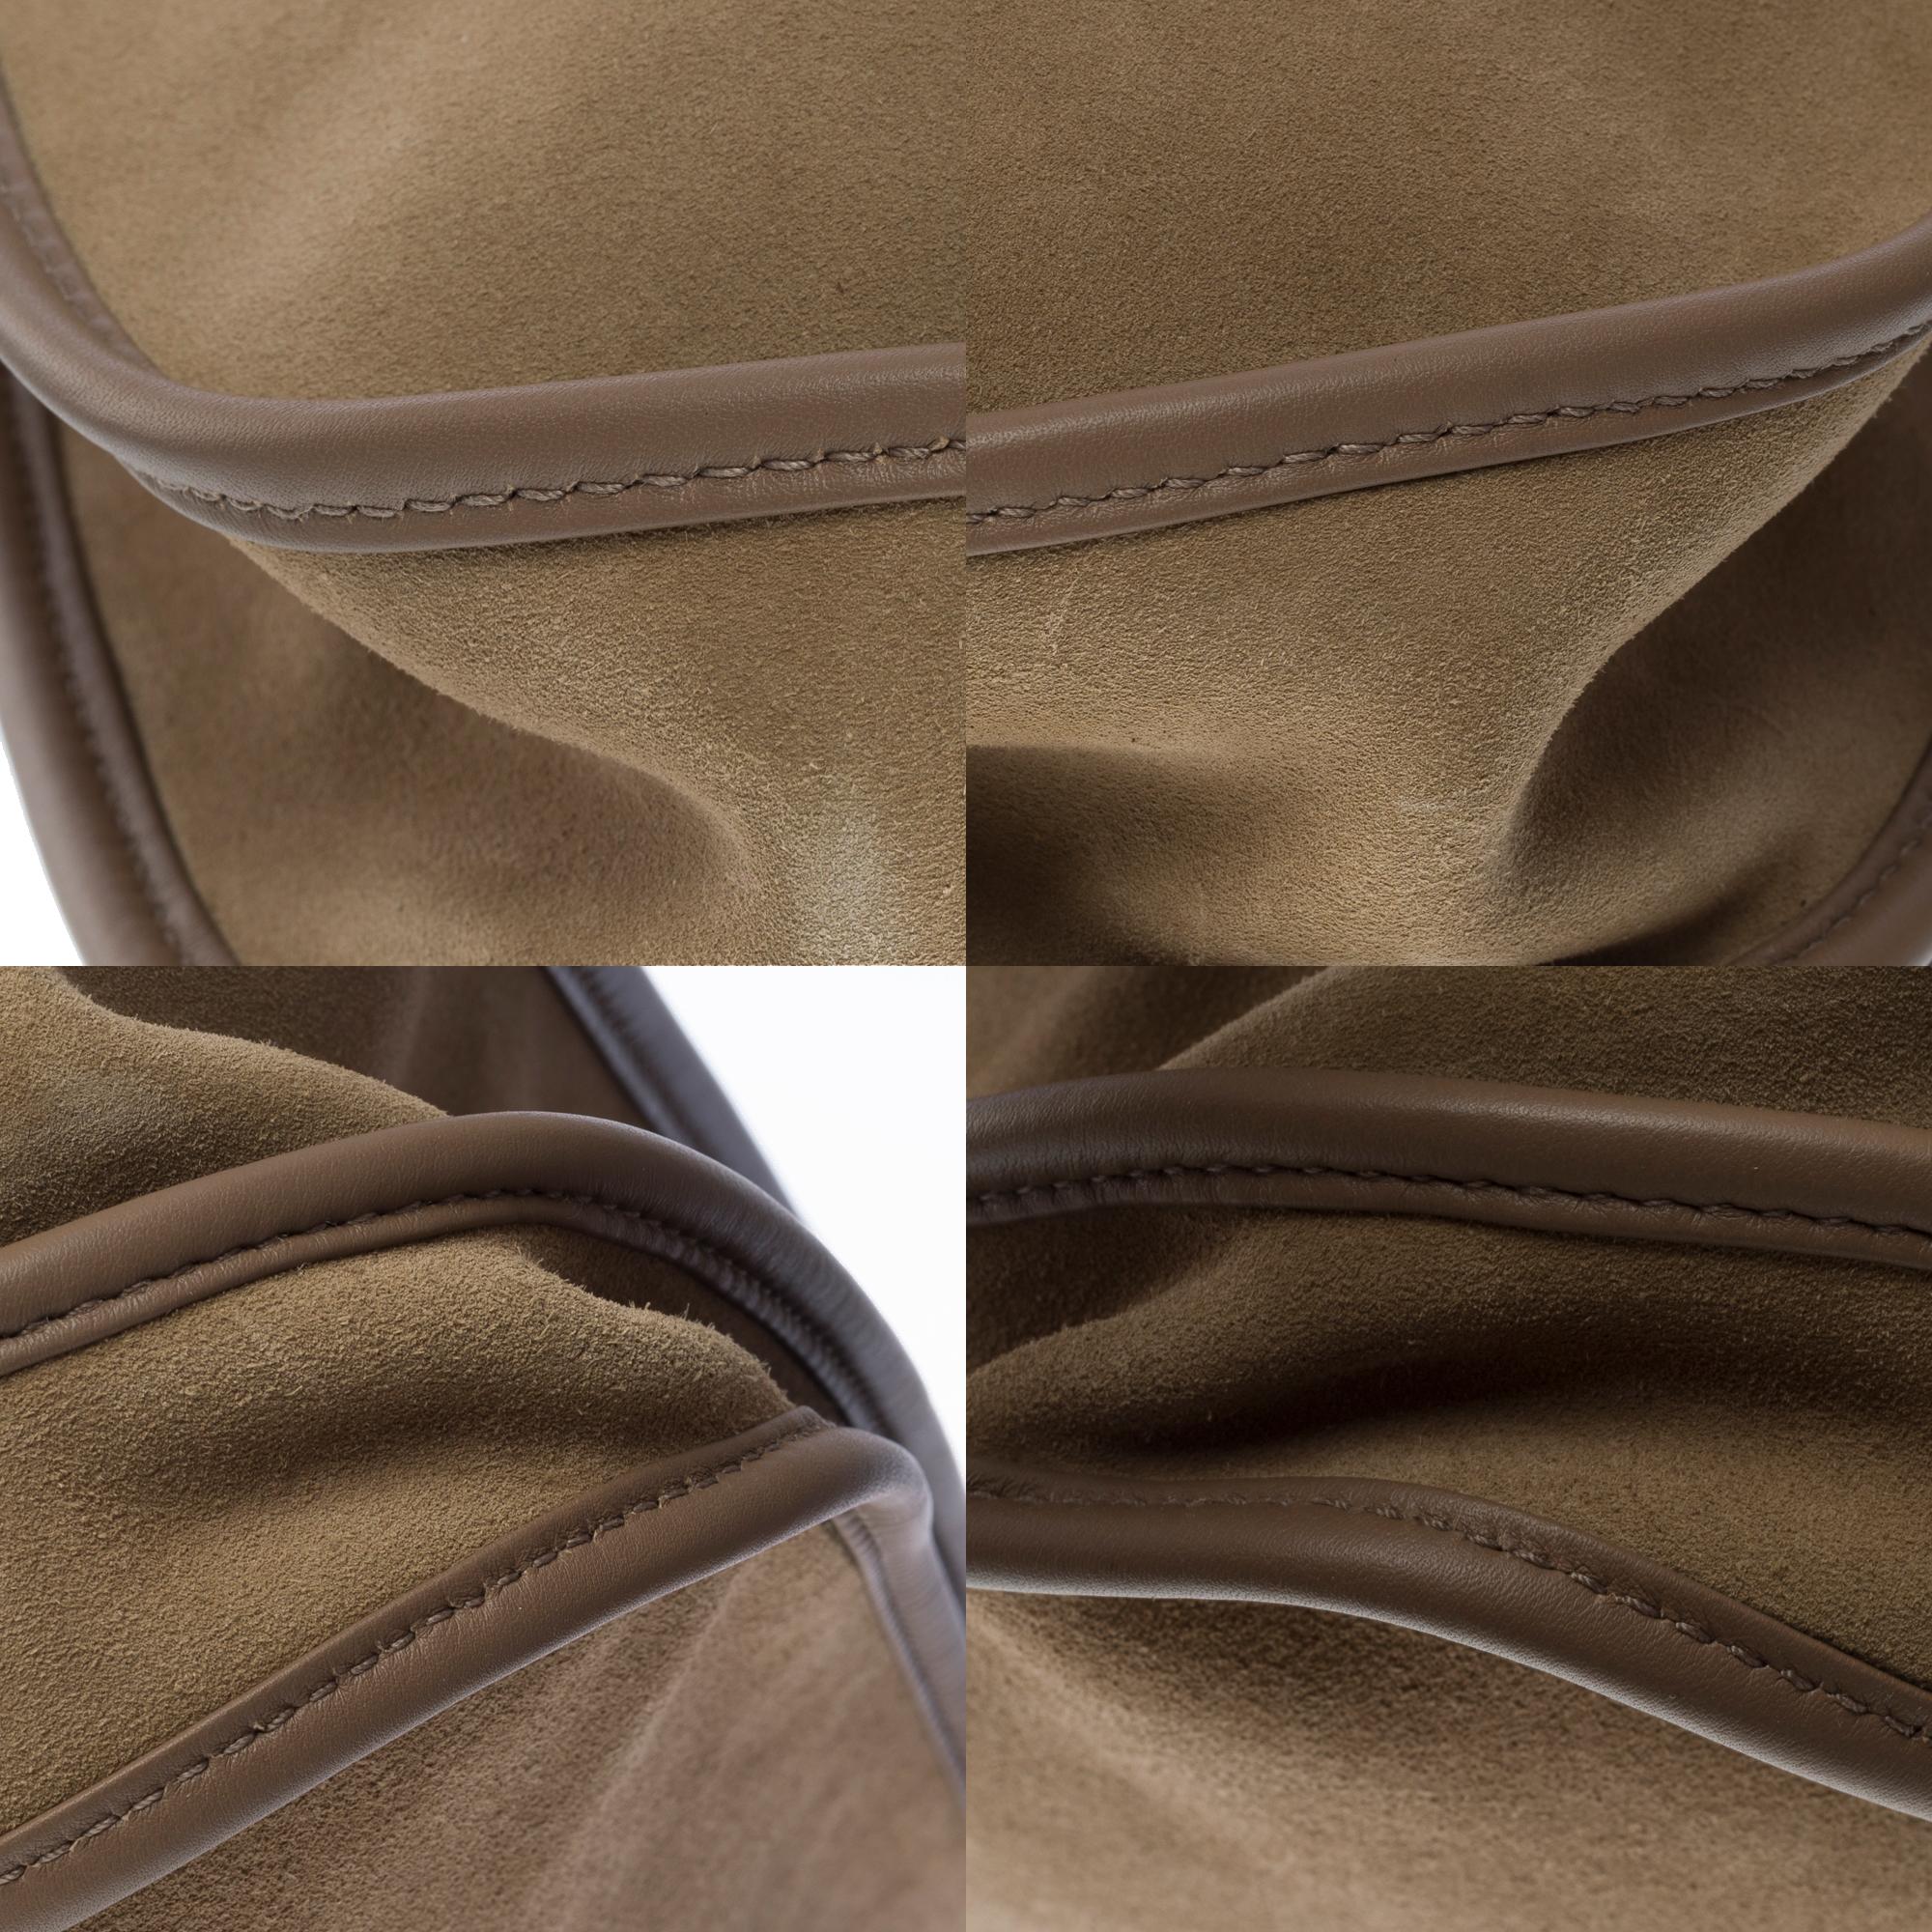 Very Rare Hermès Evelyne TGM shoulder bag in etoupe Doblis suede, SHW 7